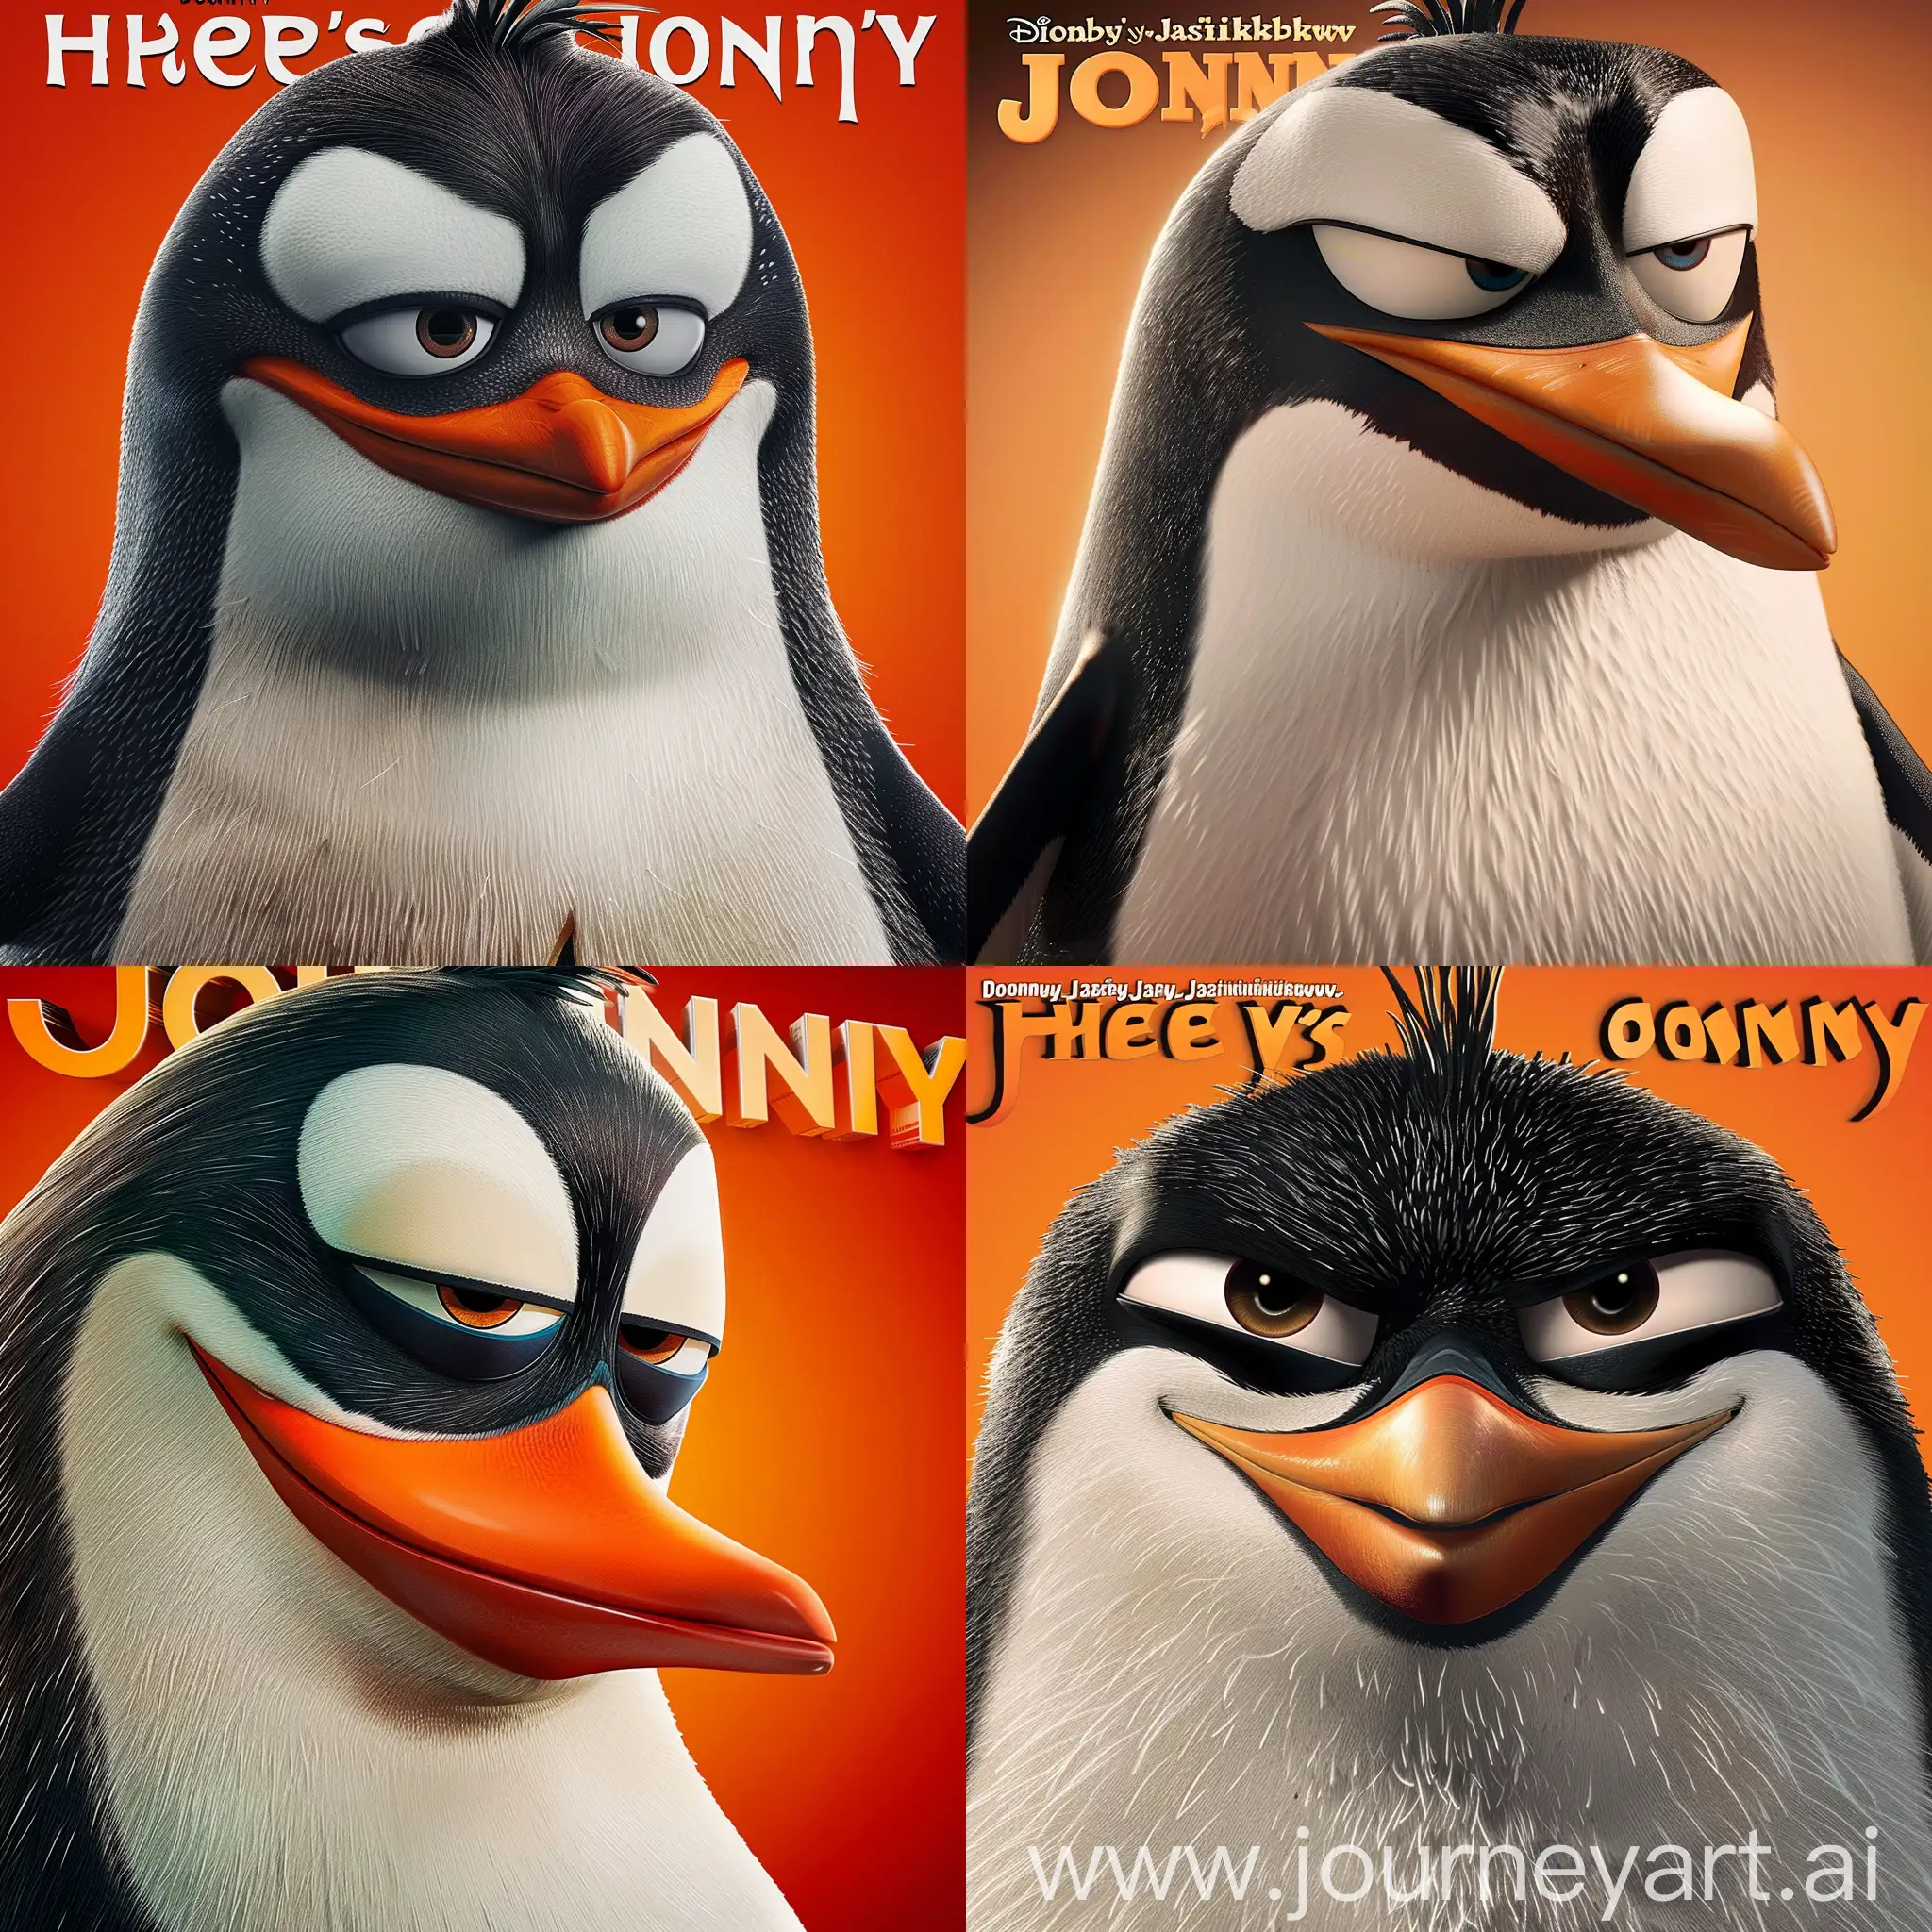 Whimsical-Penguin-Poster-by-Jaroslav-Doubrava-Johnny-in-3D-Animated-Movie